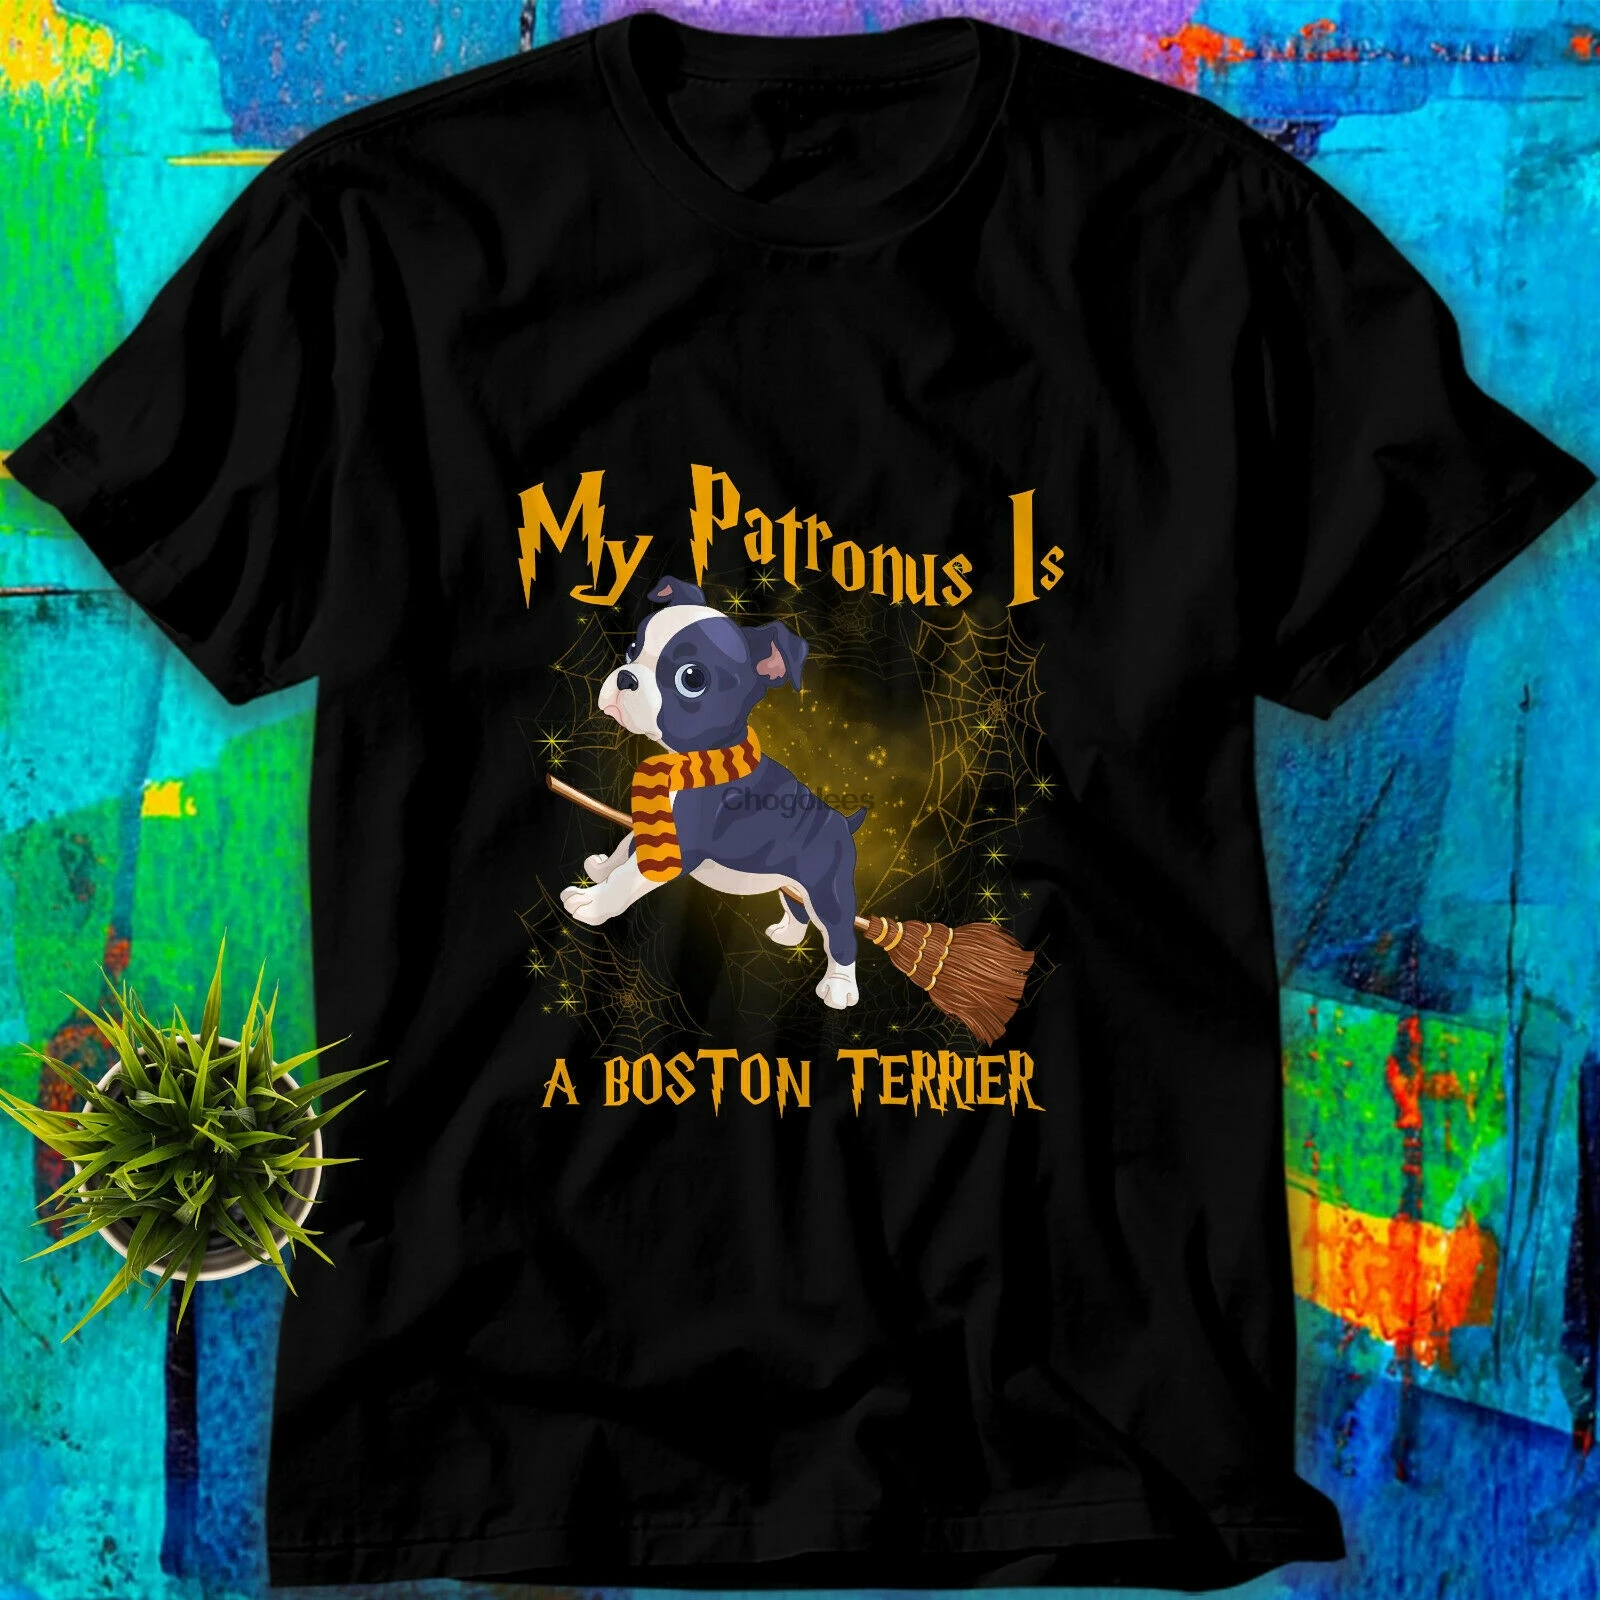 0My Patronus Is a Boston Terrier Dog Animal Lover T-Shirt Tee Gift EB31111936